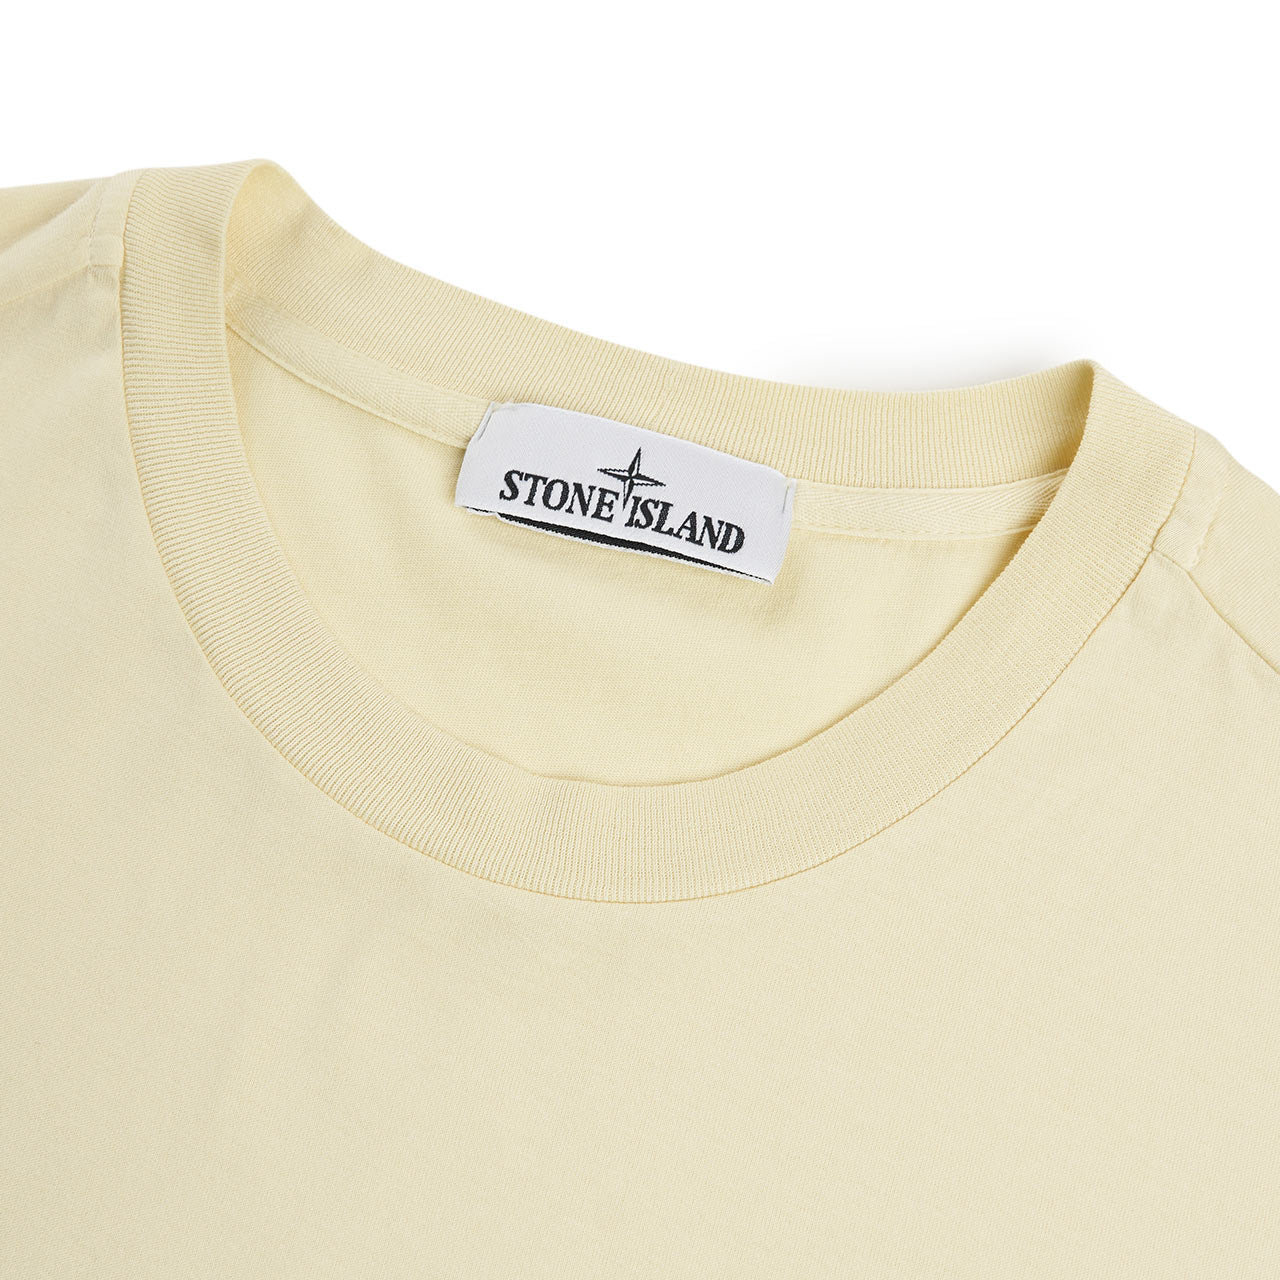 stone island kompass t-shirt (beige)